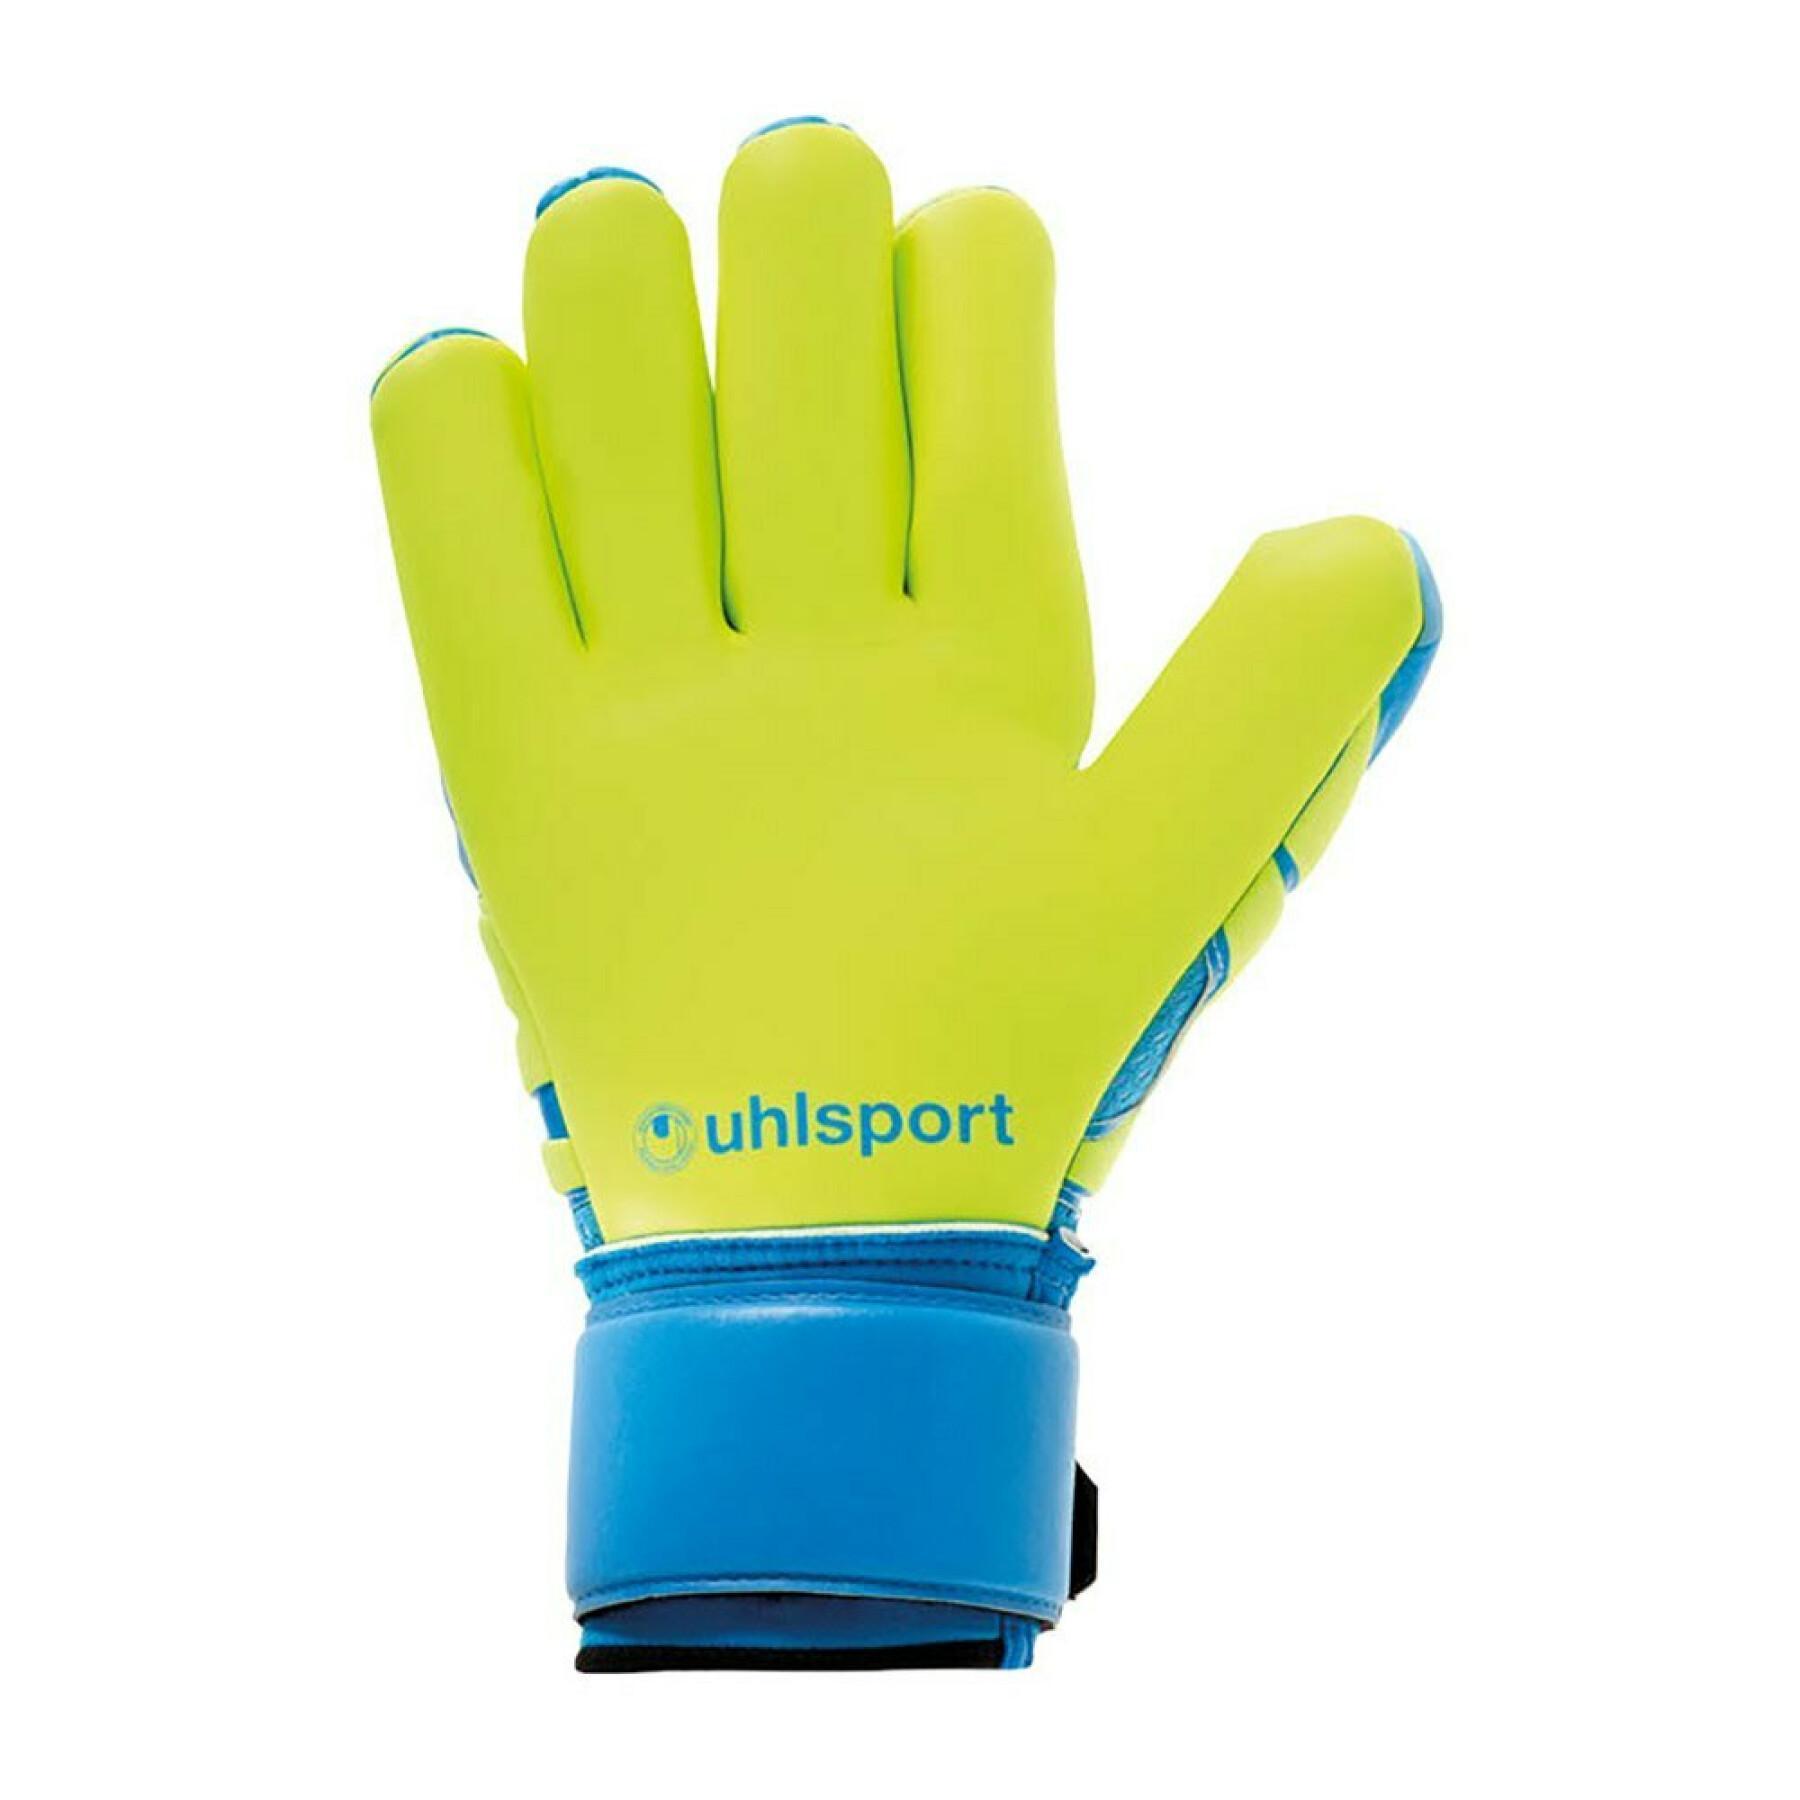 Goalkeeper gloves Uhlsport Randar Control Absolutgrip Fingersurround